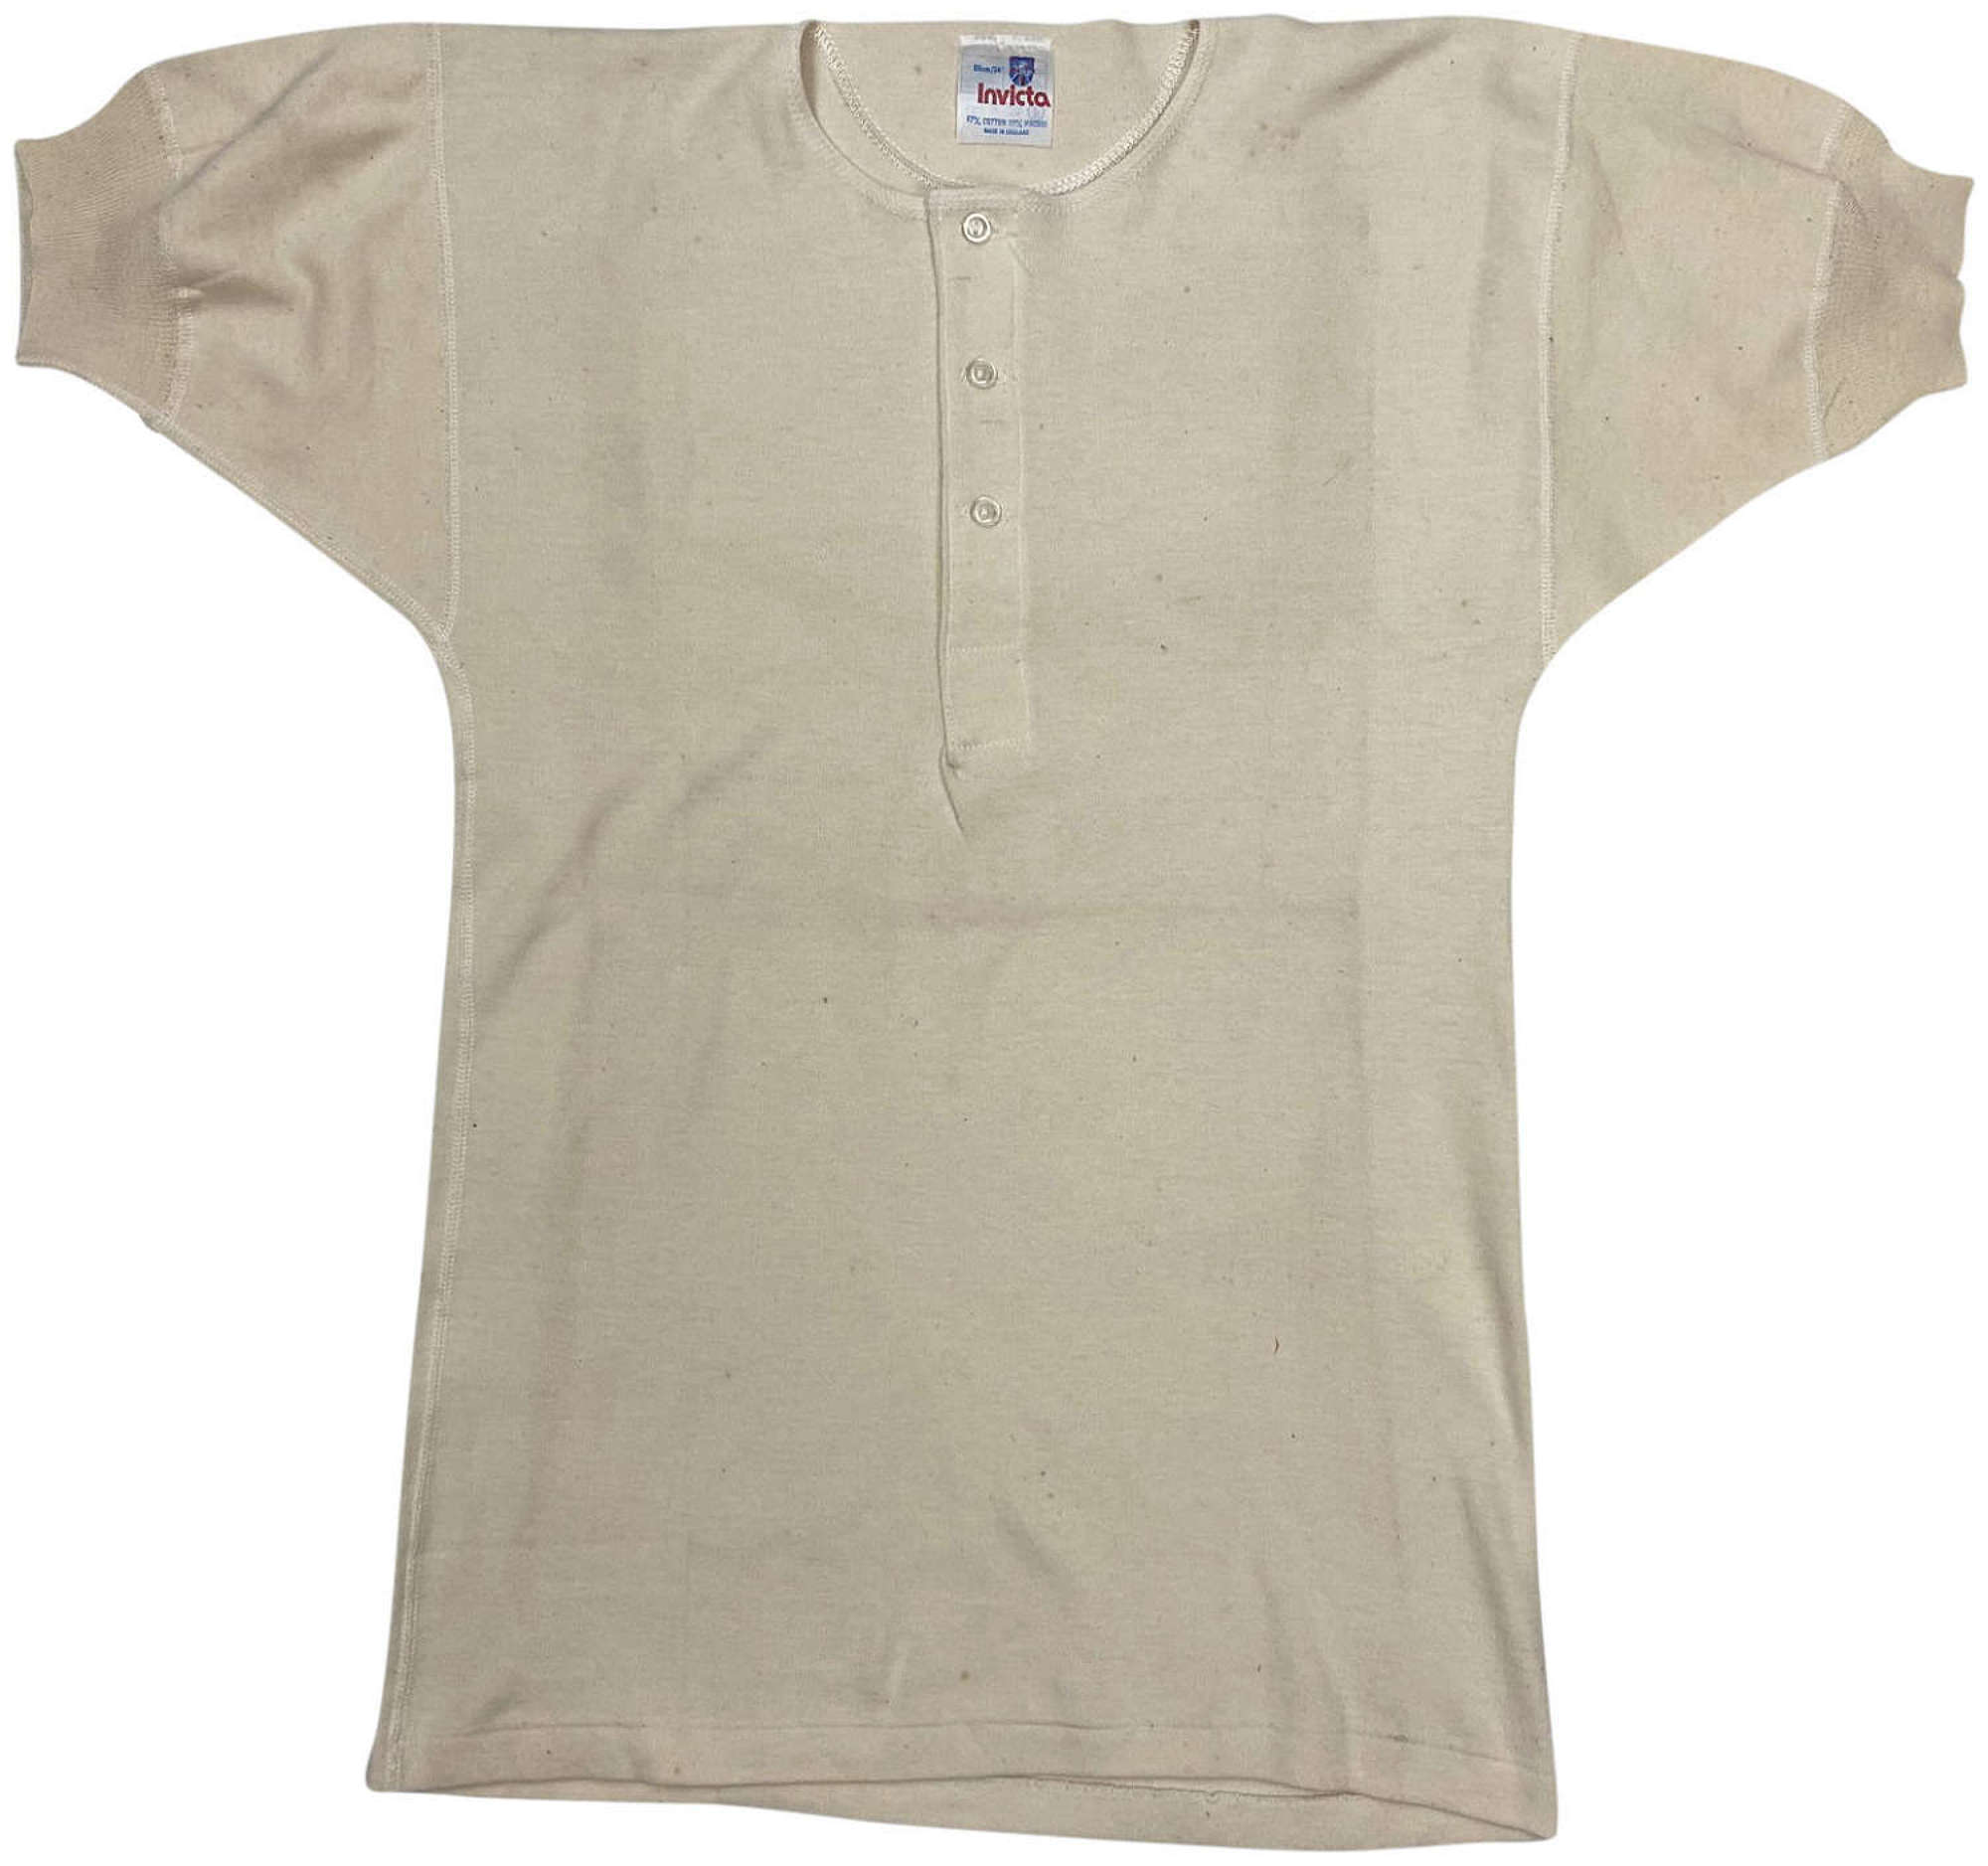 Original 1960s Men's Undershirt by 'Invicta' - Size 34